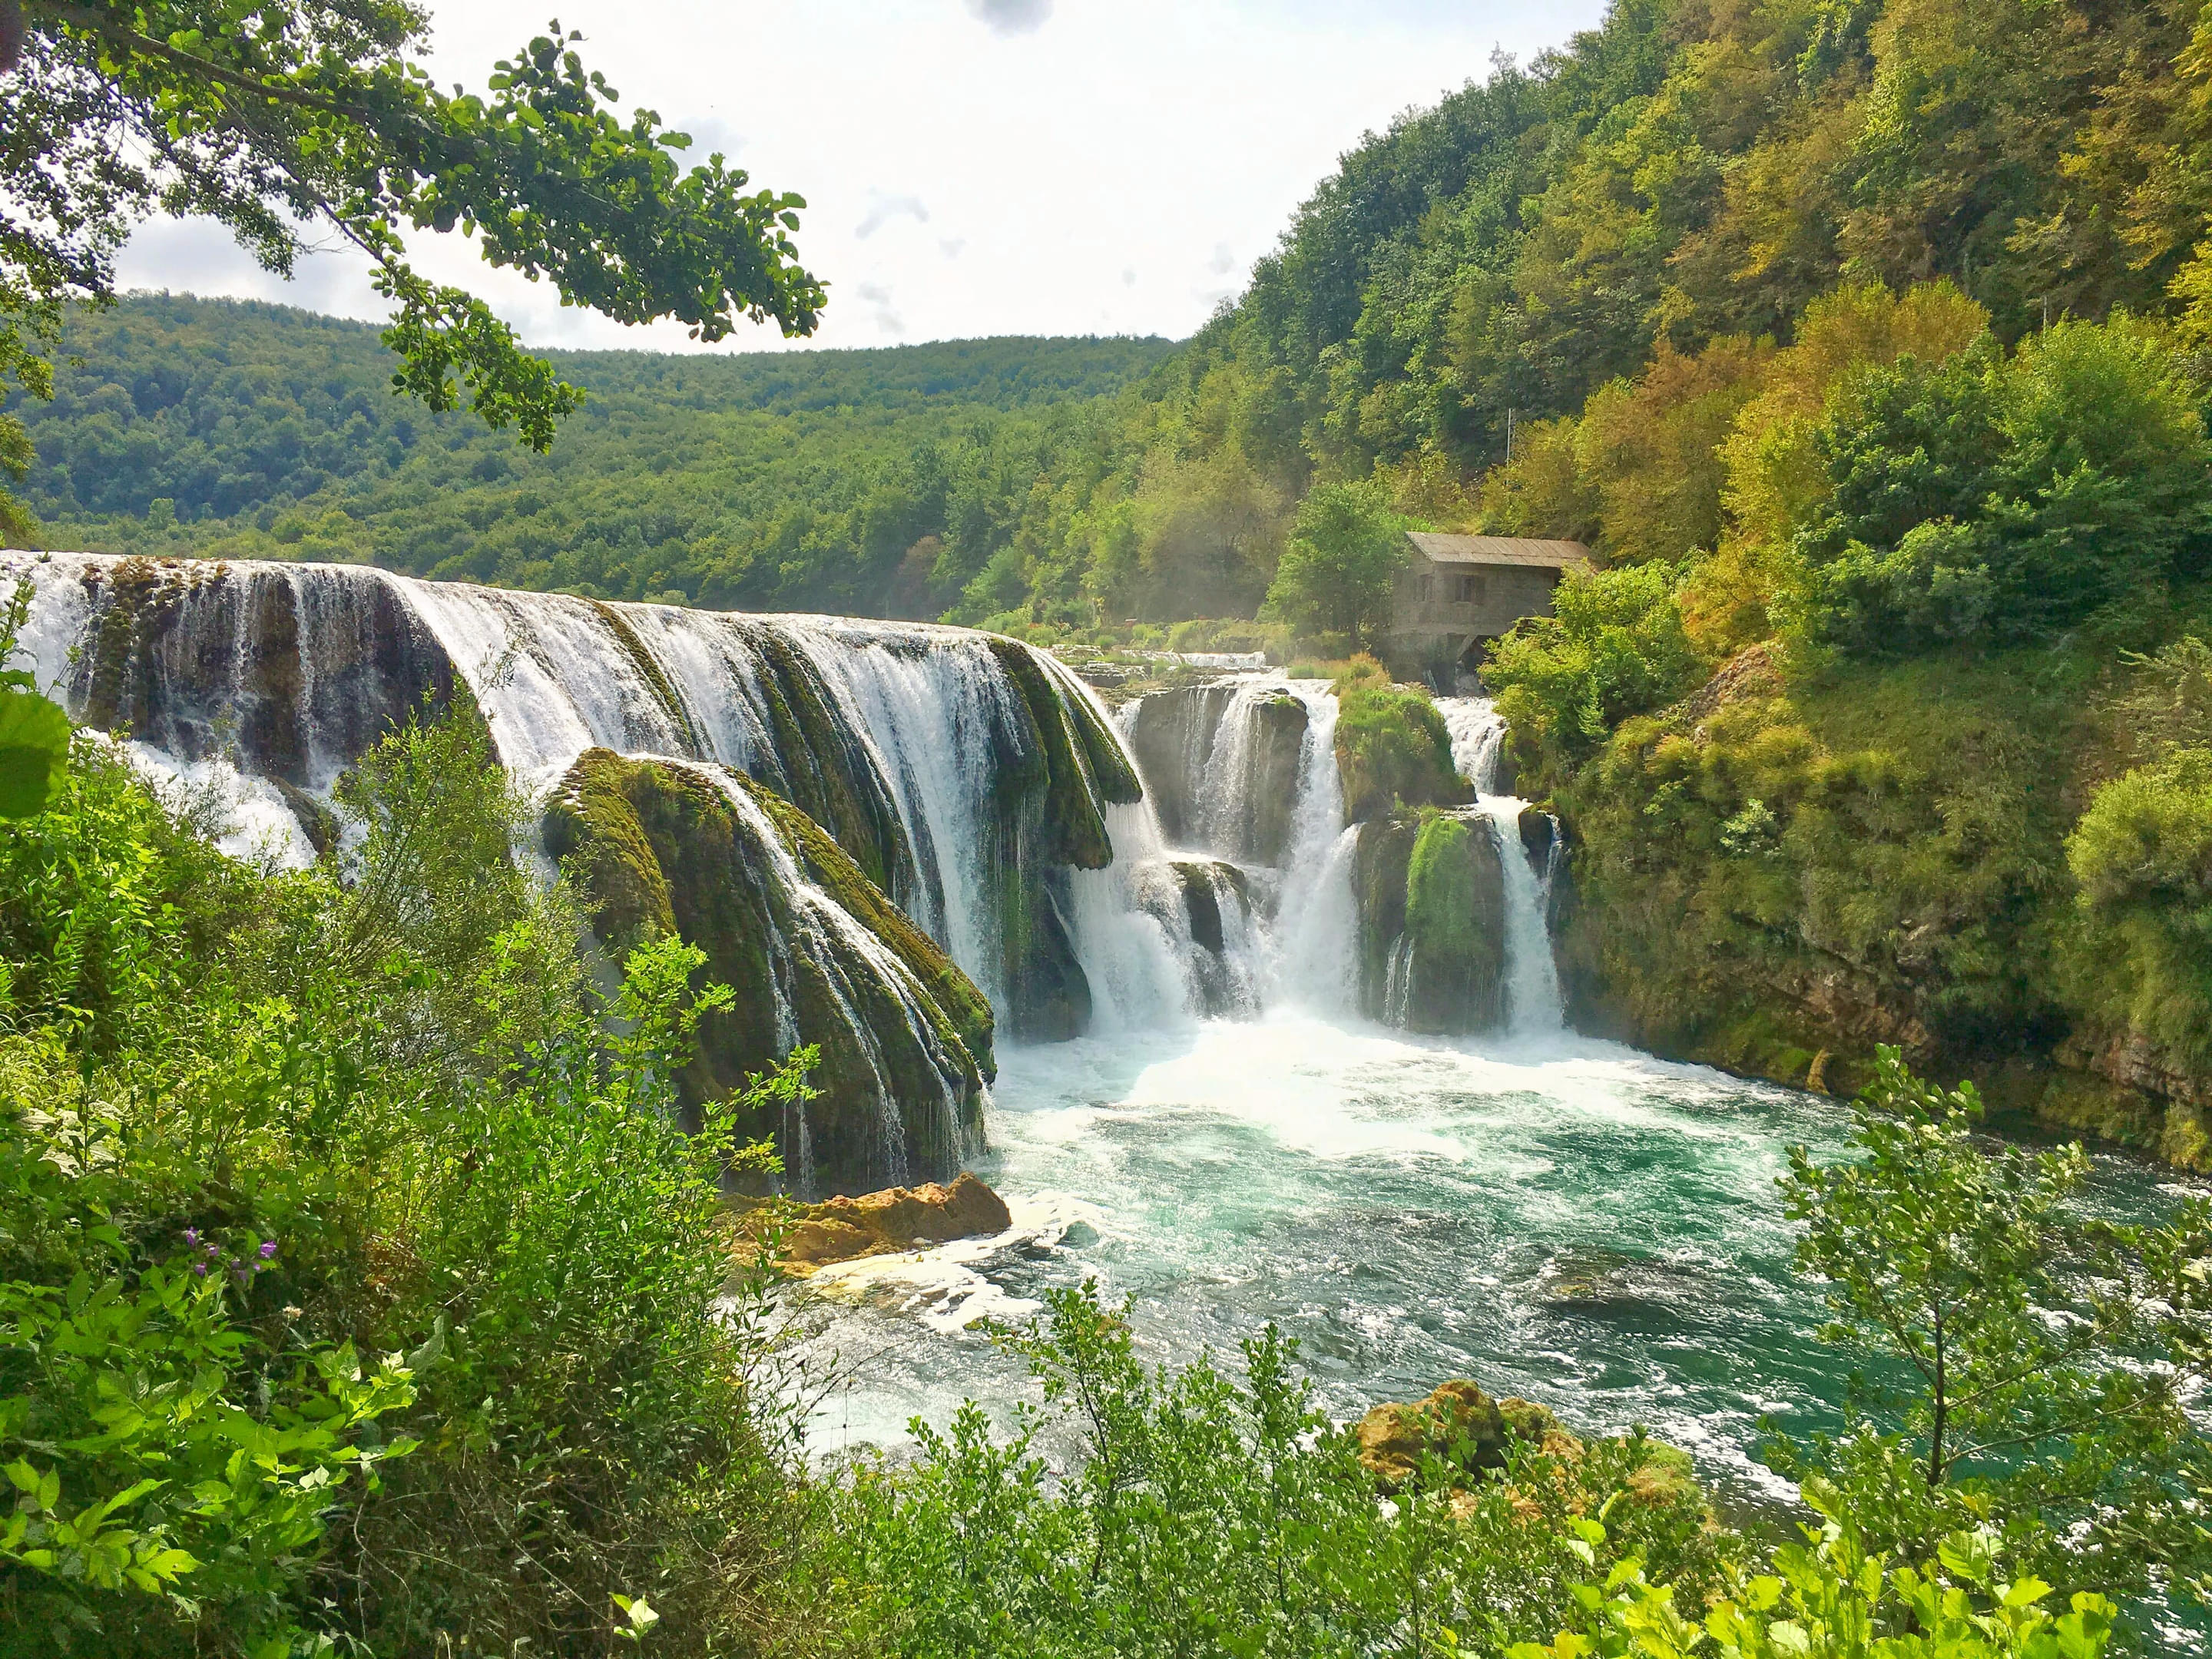 Neer Garh Waterfall Overview